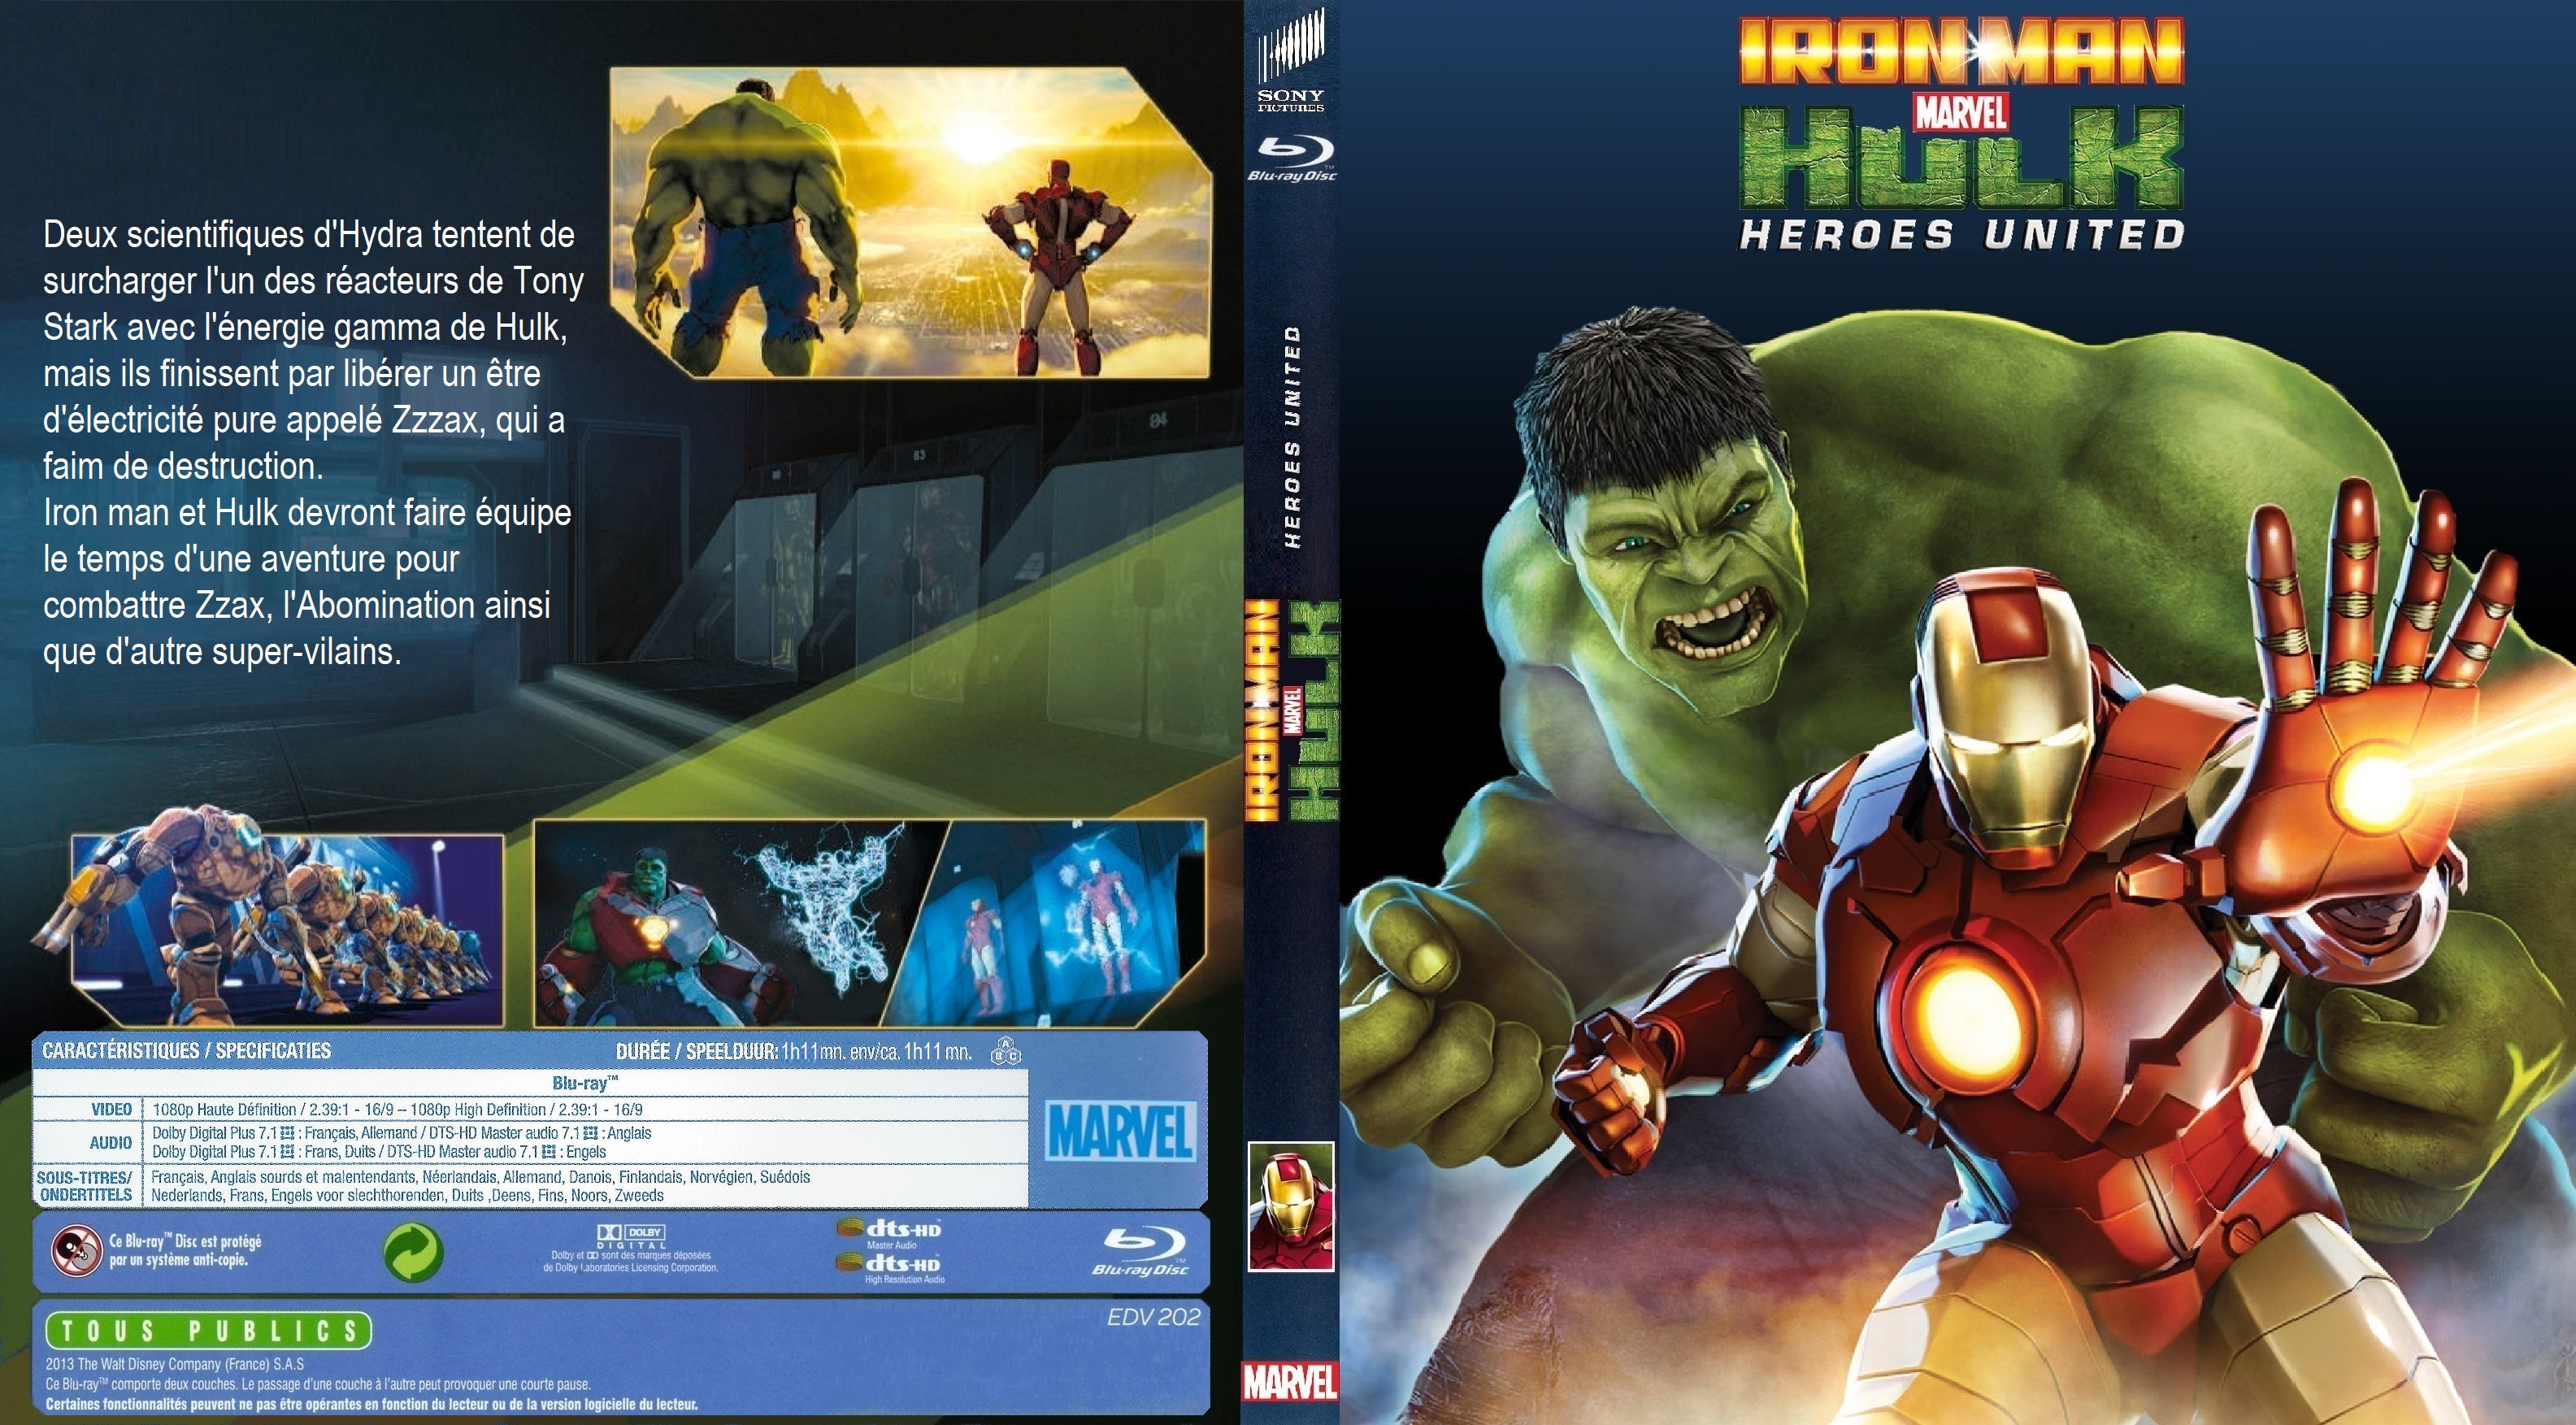 Jaquette DVD Iron man & Hulk Heroes United BLU RAY custom